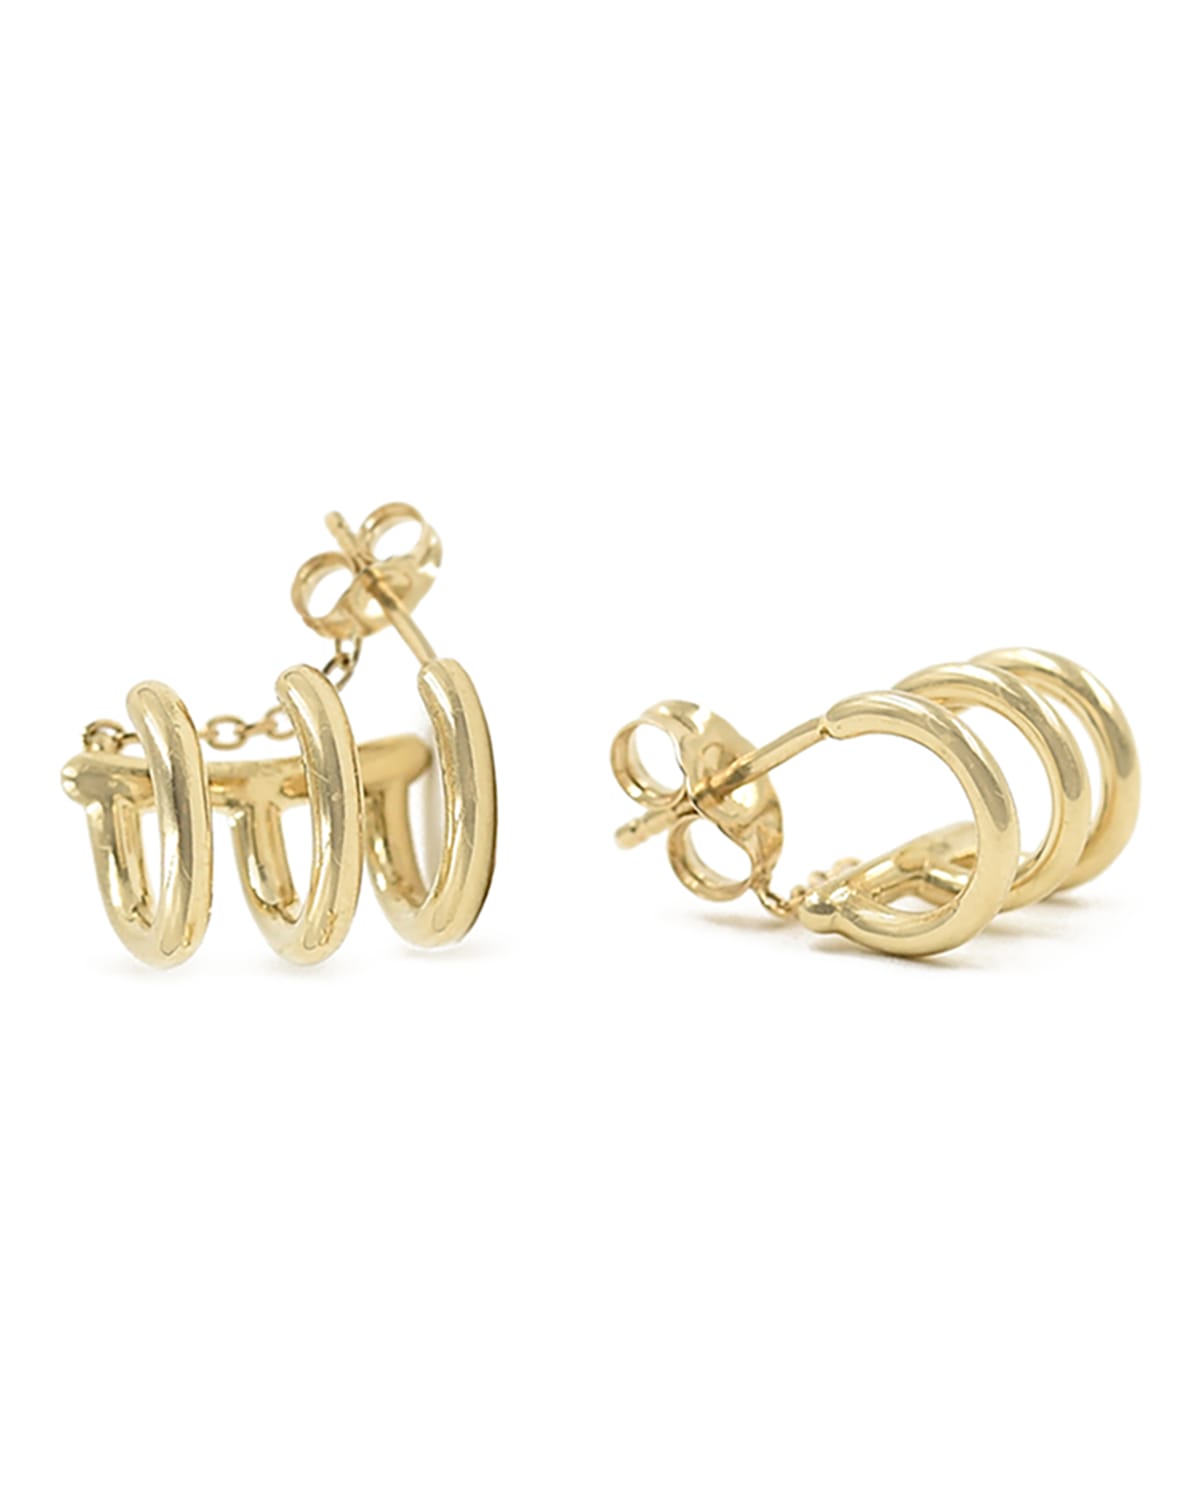 BONDEYE JEWELRY 14k Gold 3-Hoop Earrings